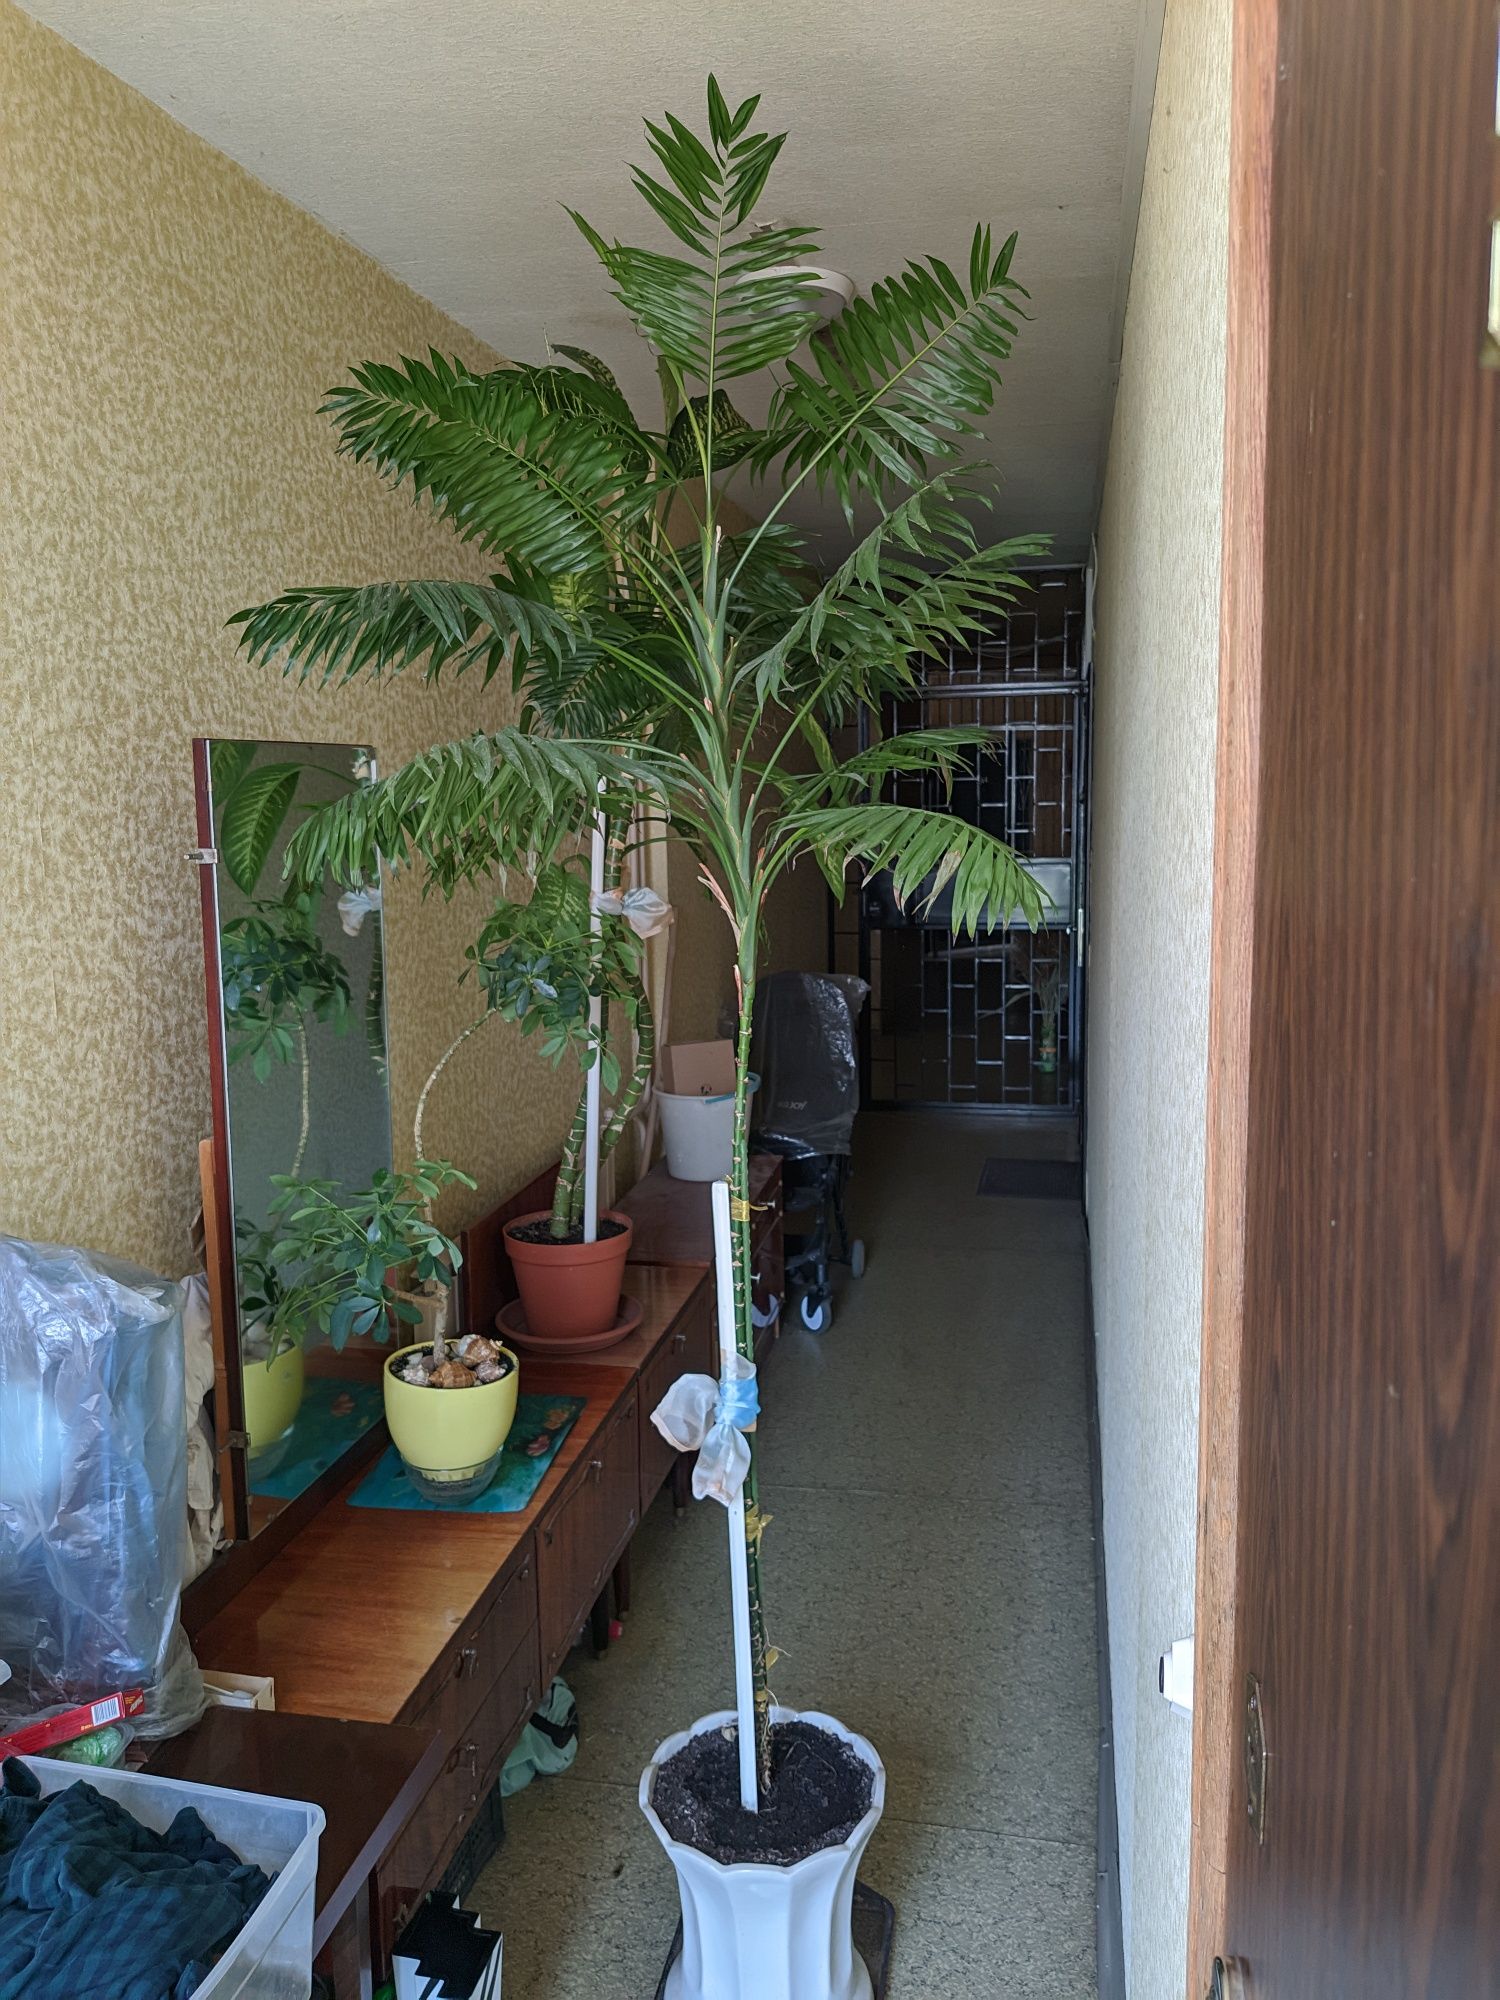 Хамедорея (2,40 метра, с горшком) Chamaedorea Бамбуковая пальма Неанта